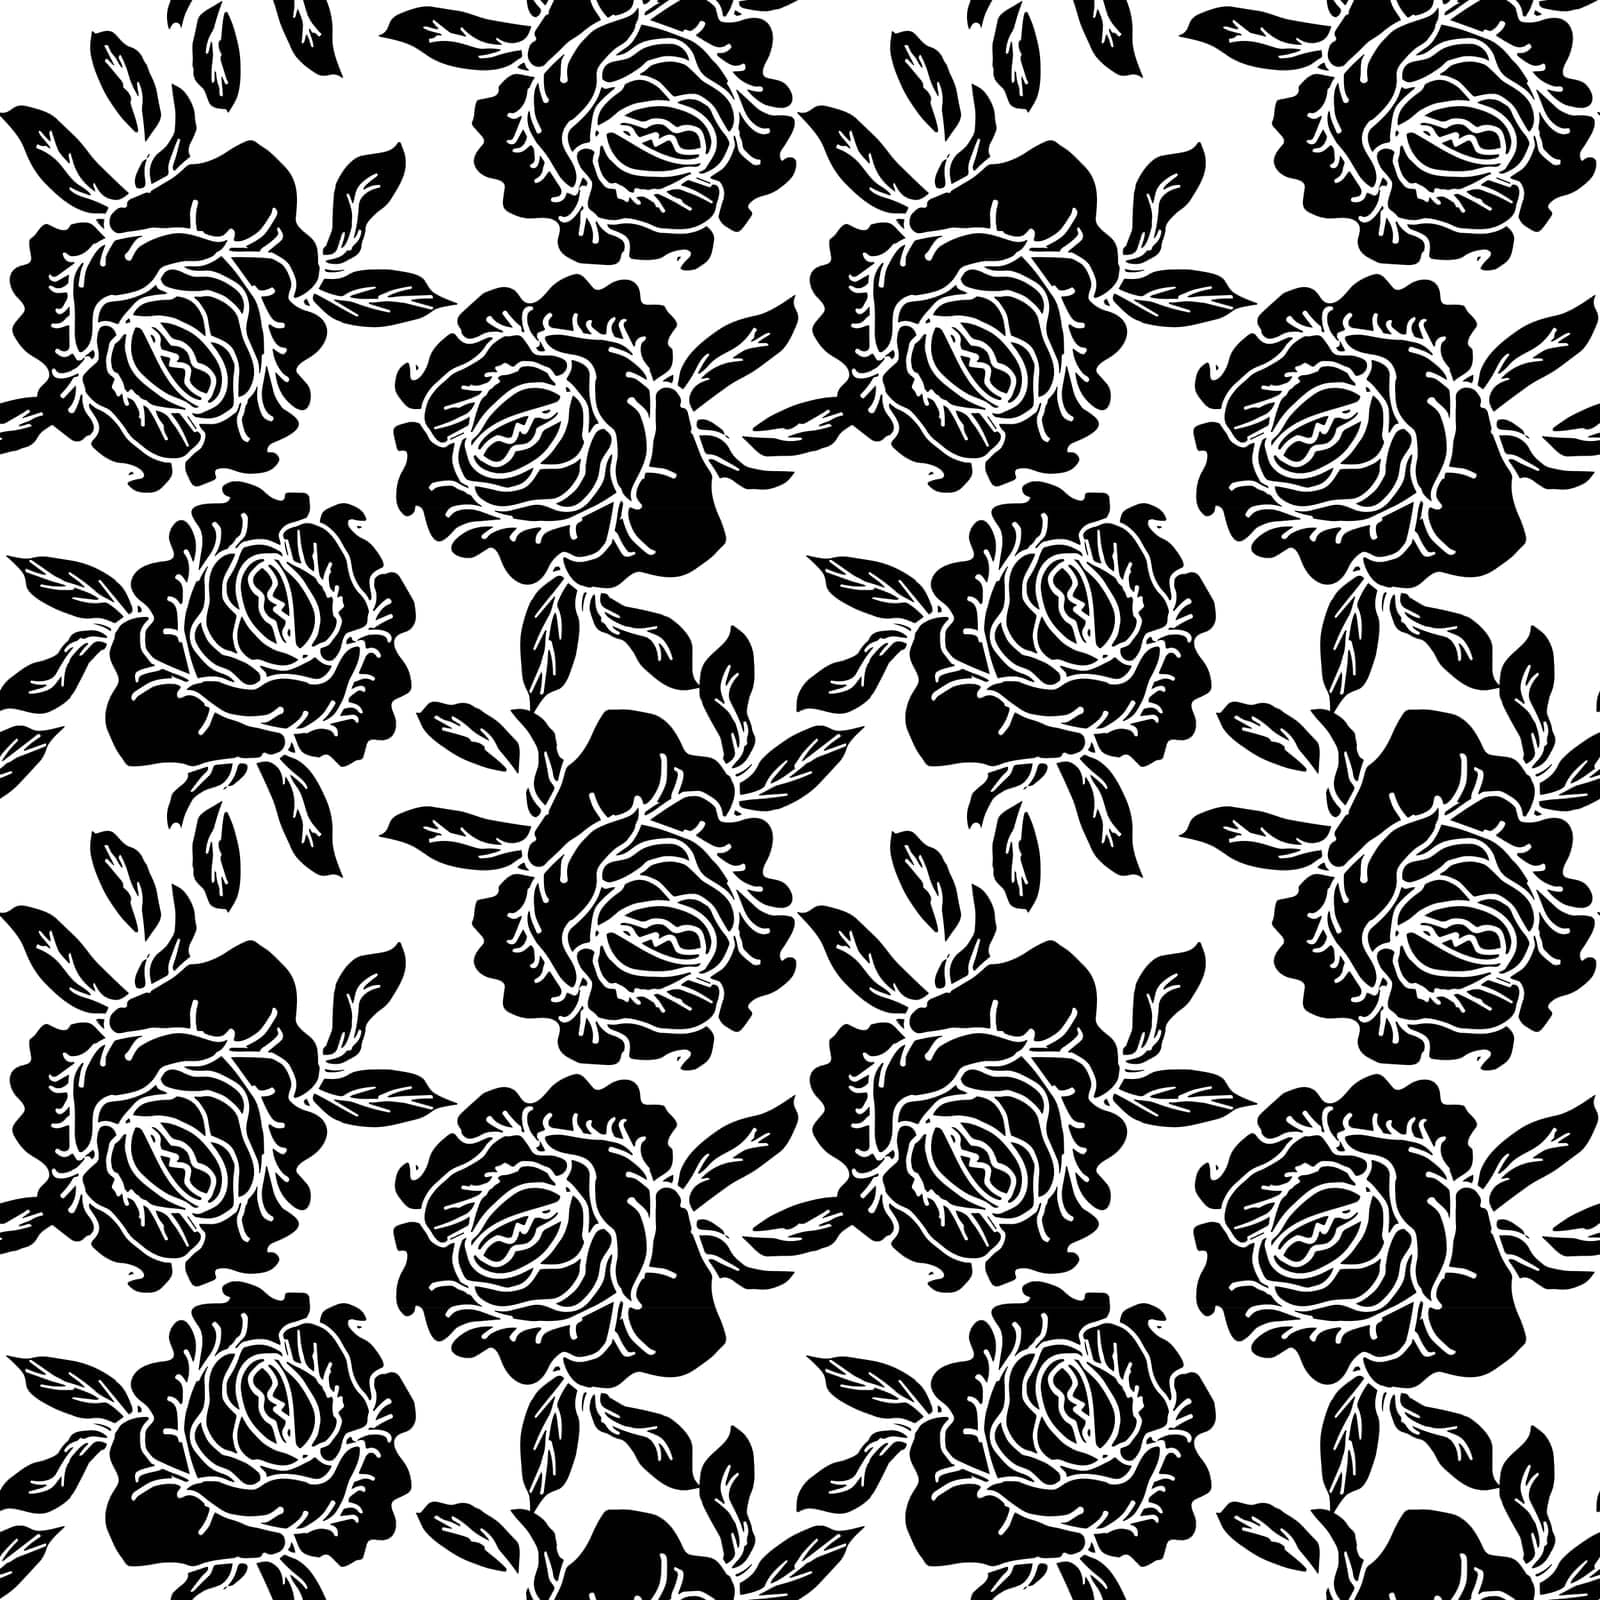 Delicate rose flower, line art hand drawn design for surface design of textile. Roses flower line art background vector. Natural botanical elegant flower with line art hand drawn illustration.